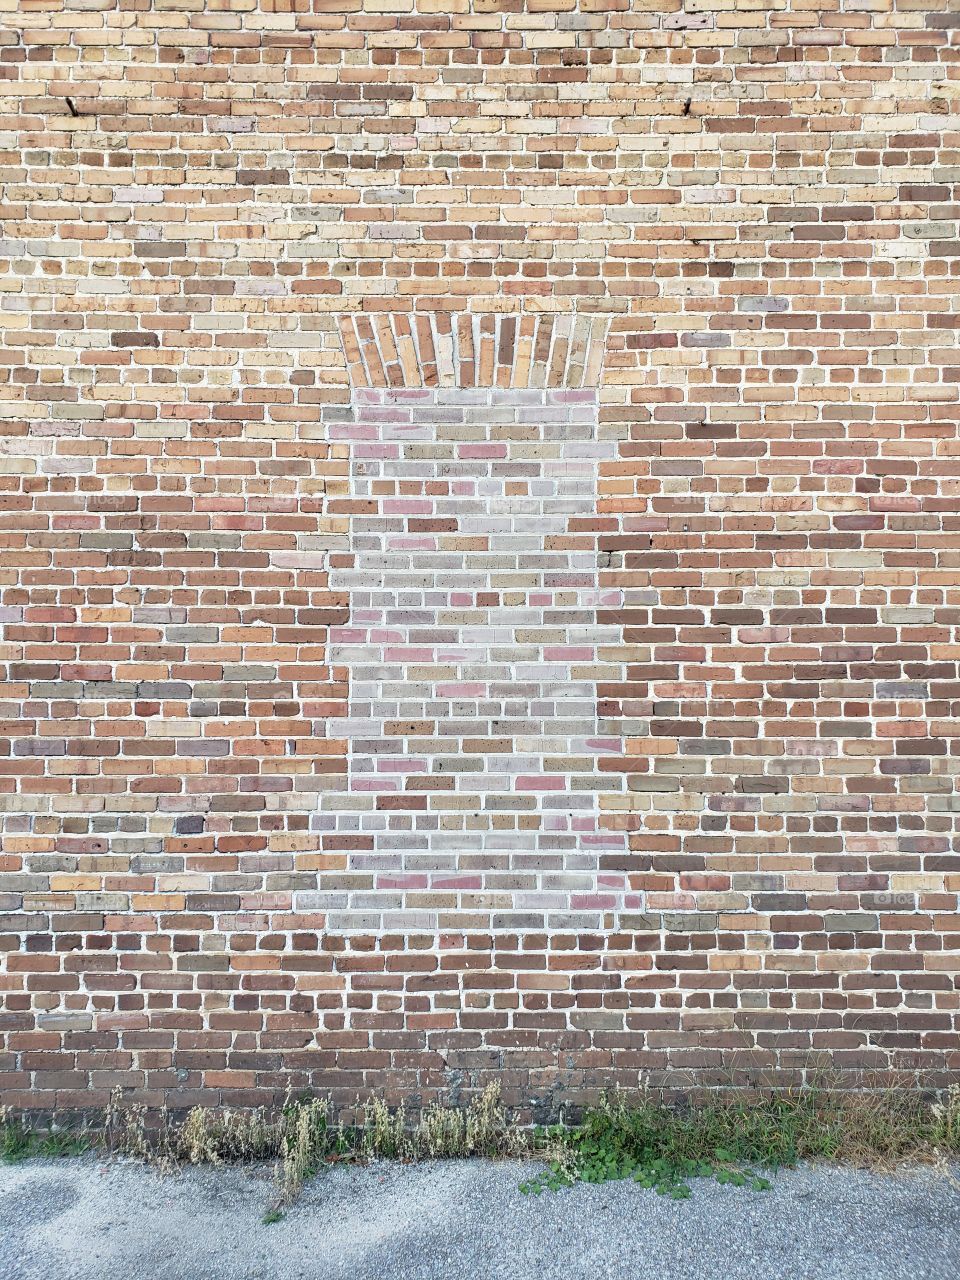 Brick Window